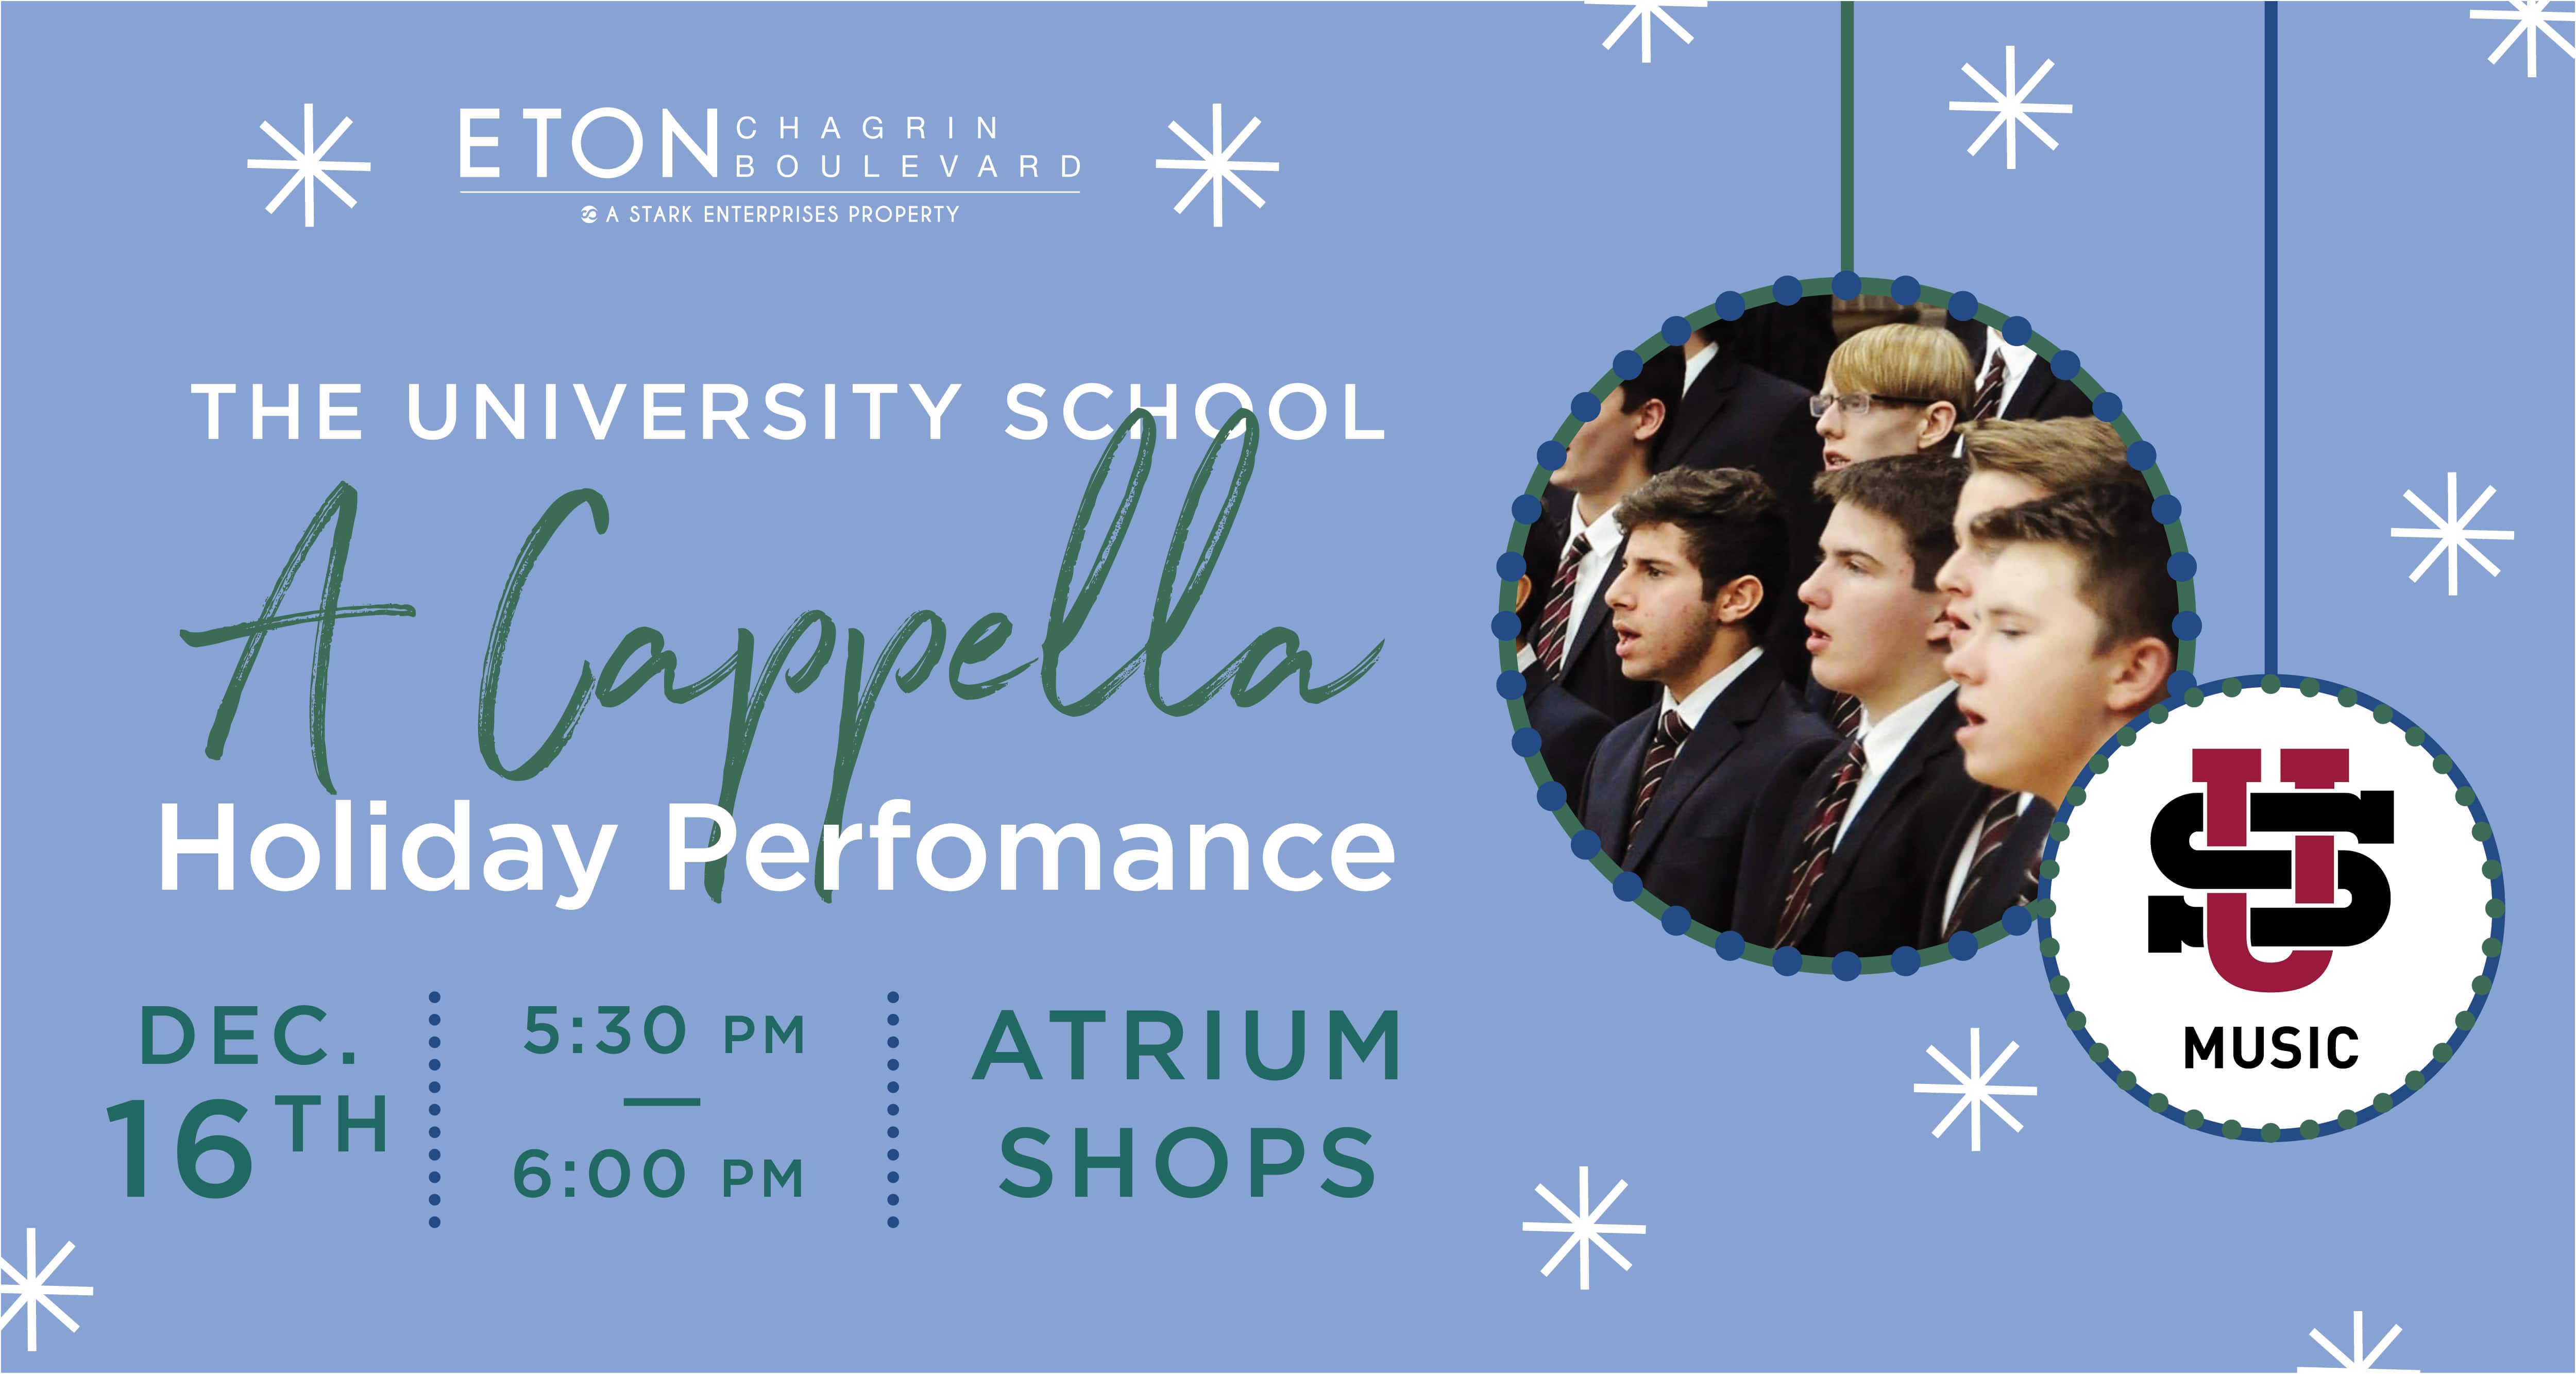 The University School Acapella Performance